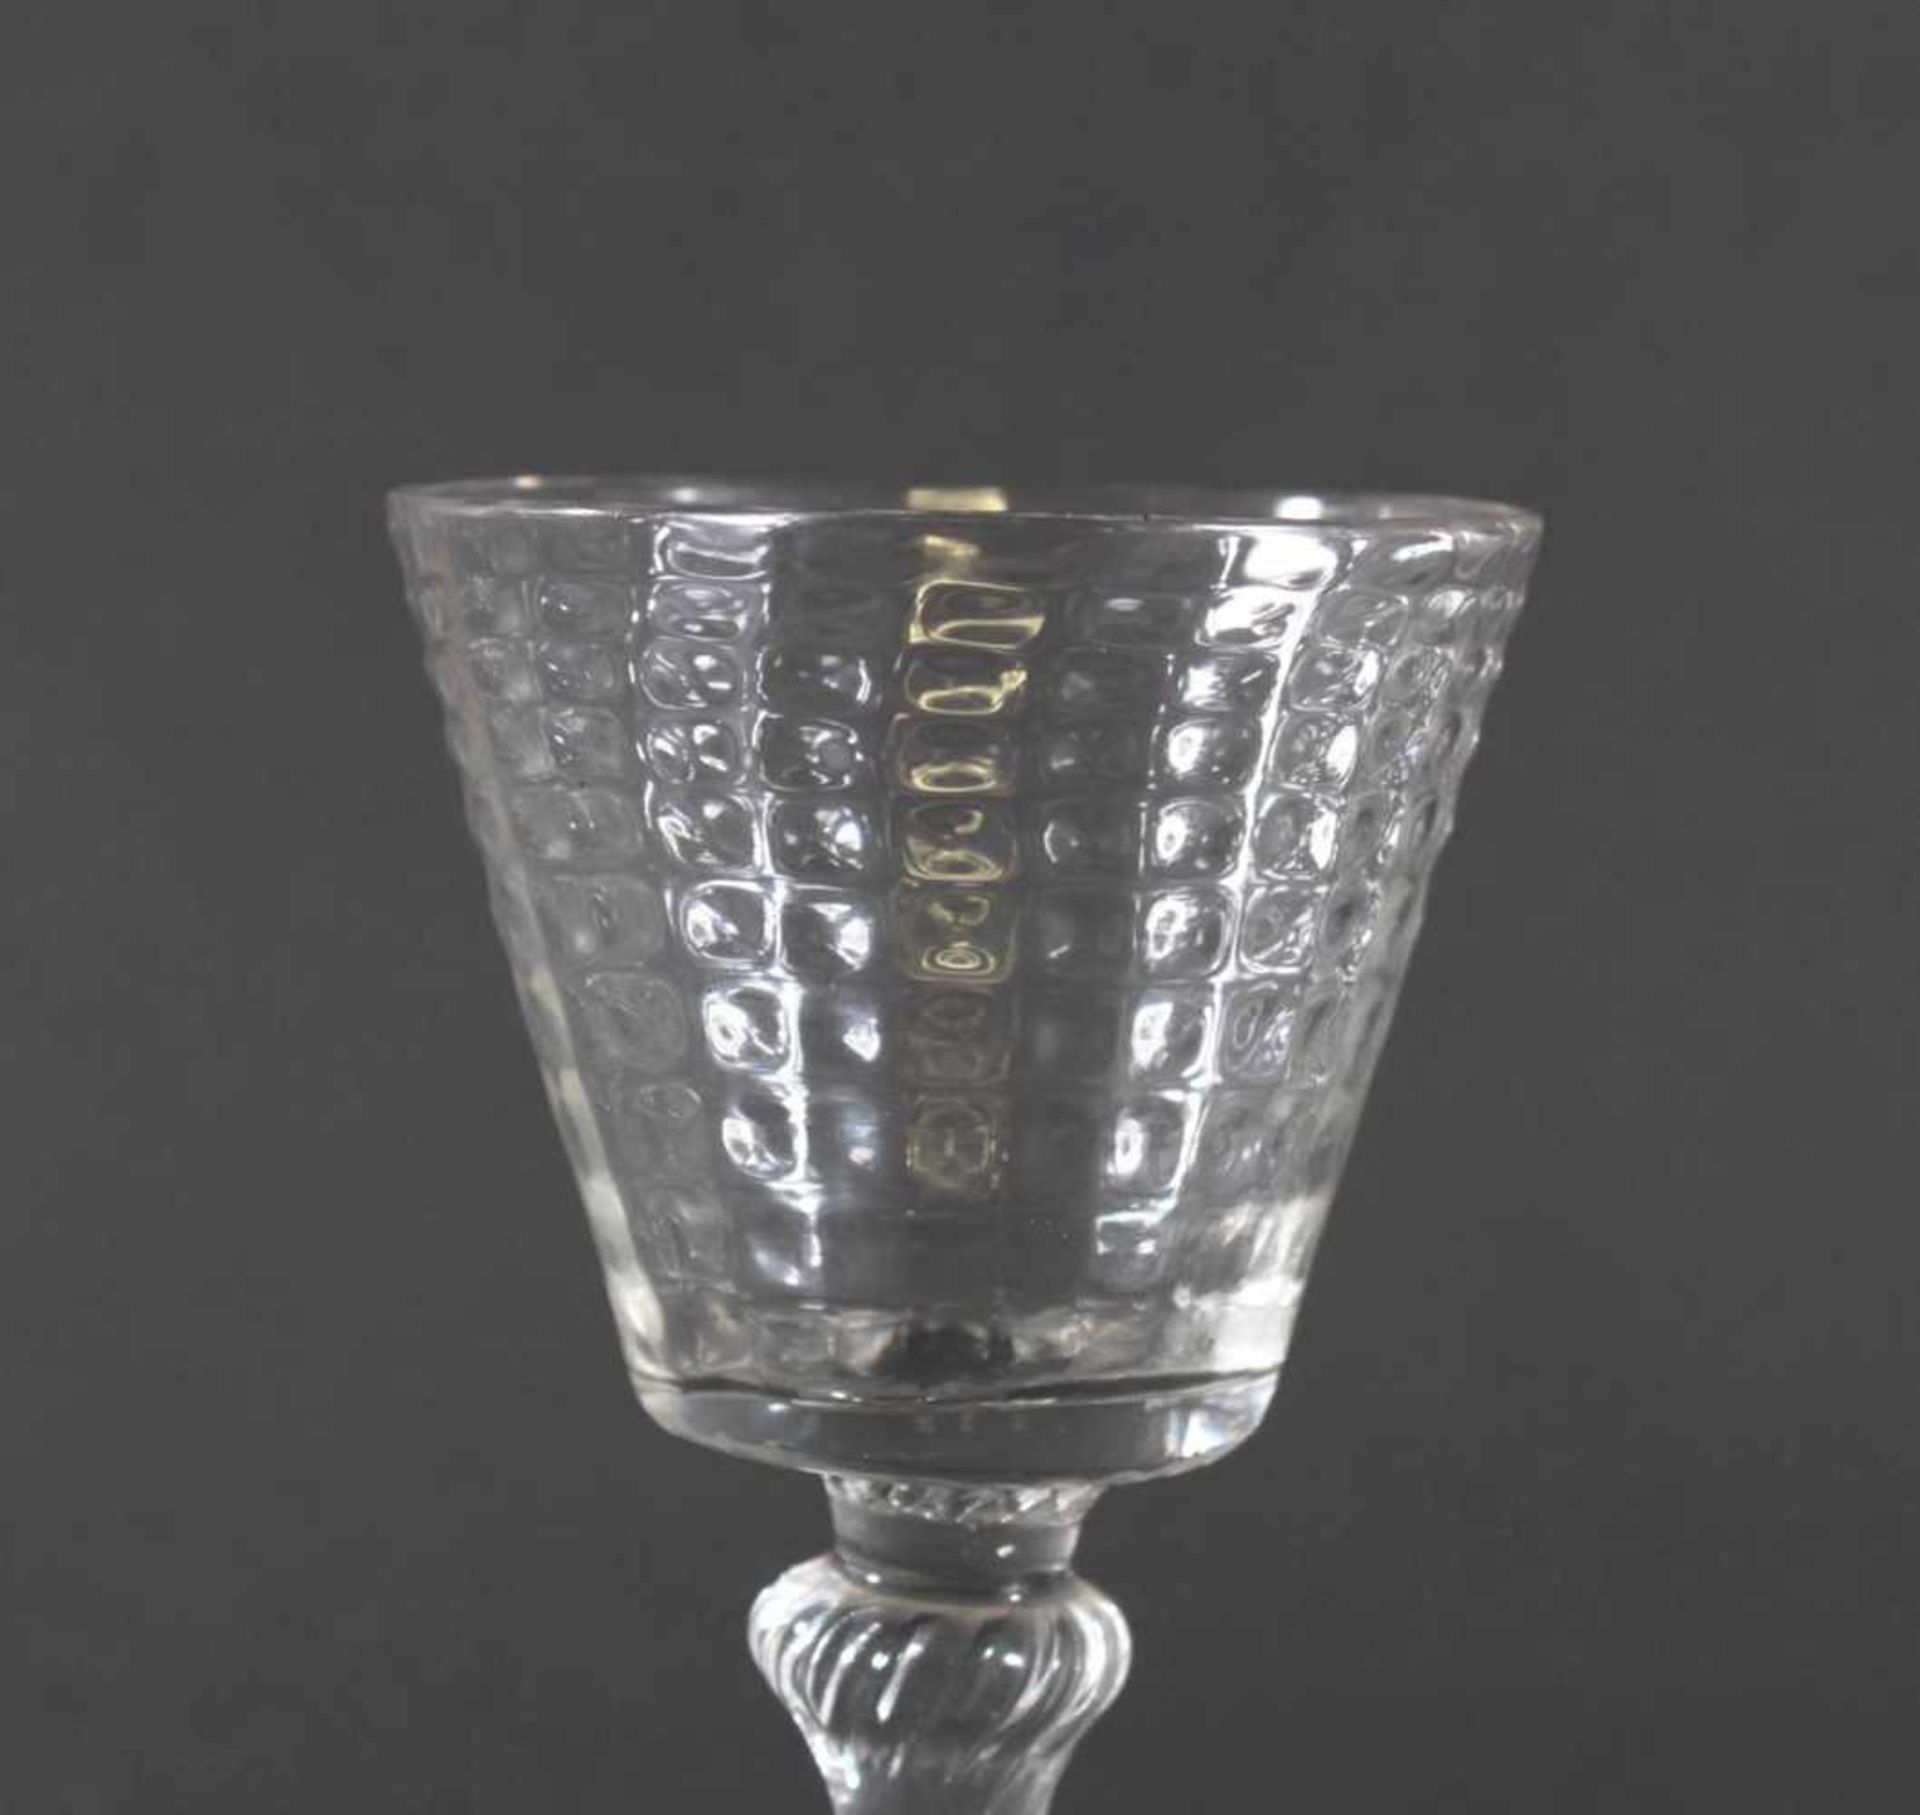 Südweinglas, Lüttich, um 1780Farbloses Glas, mit wabenartiger Struktur überzogene Kuppa. - Image 3 of 5